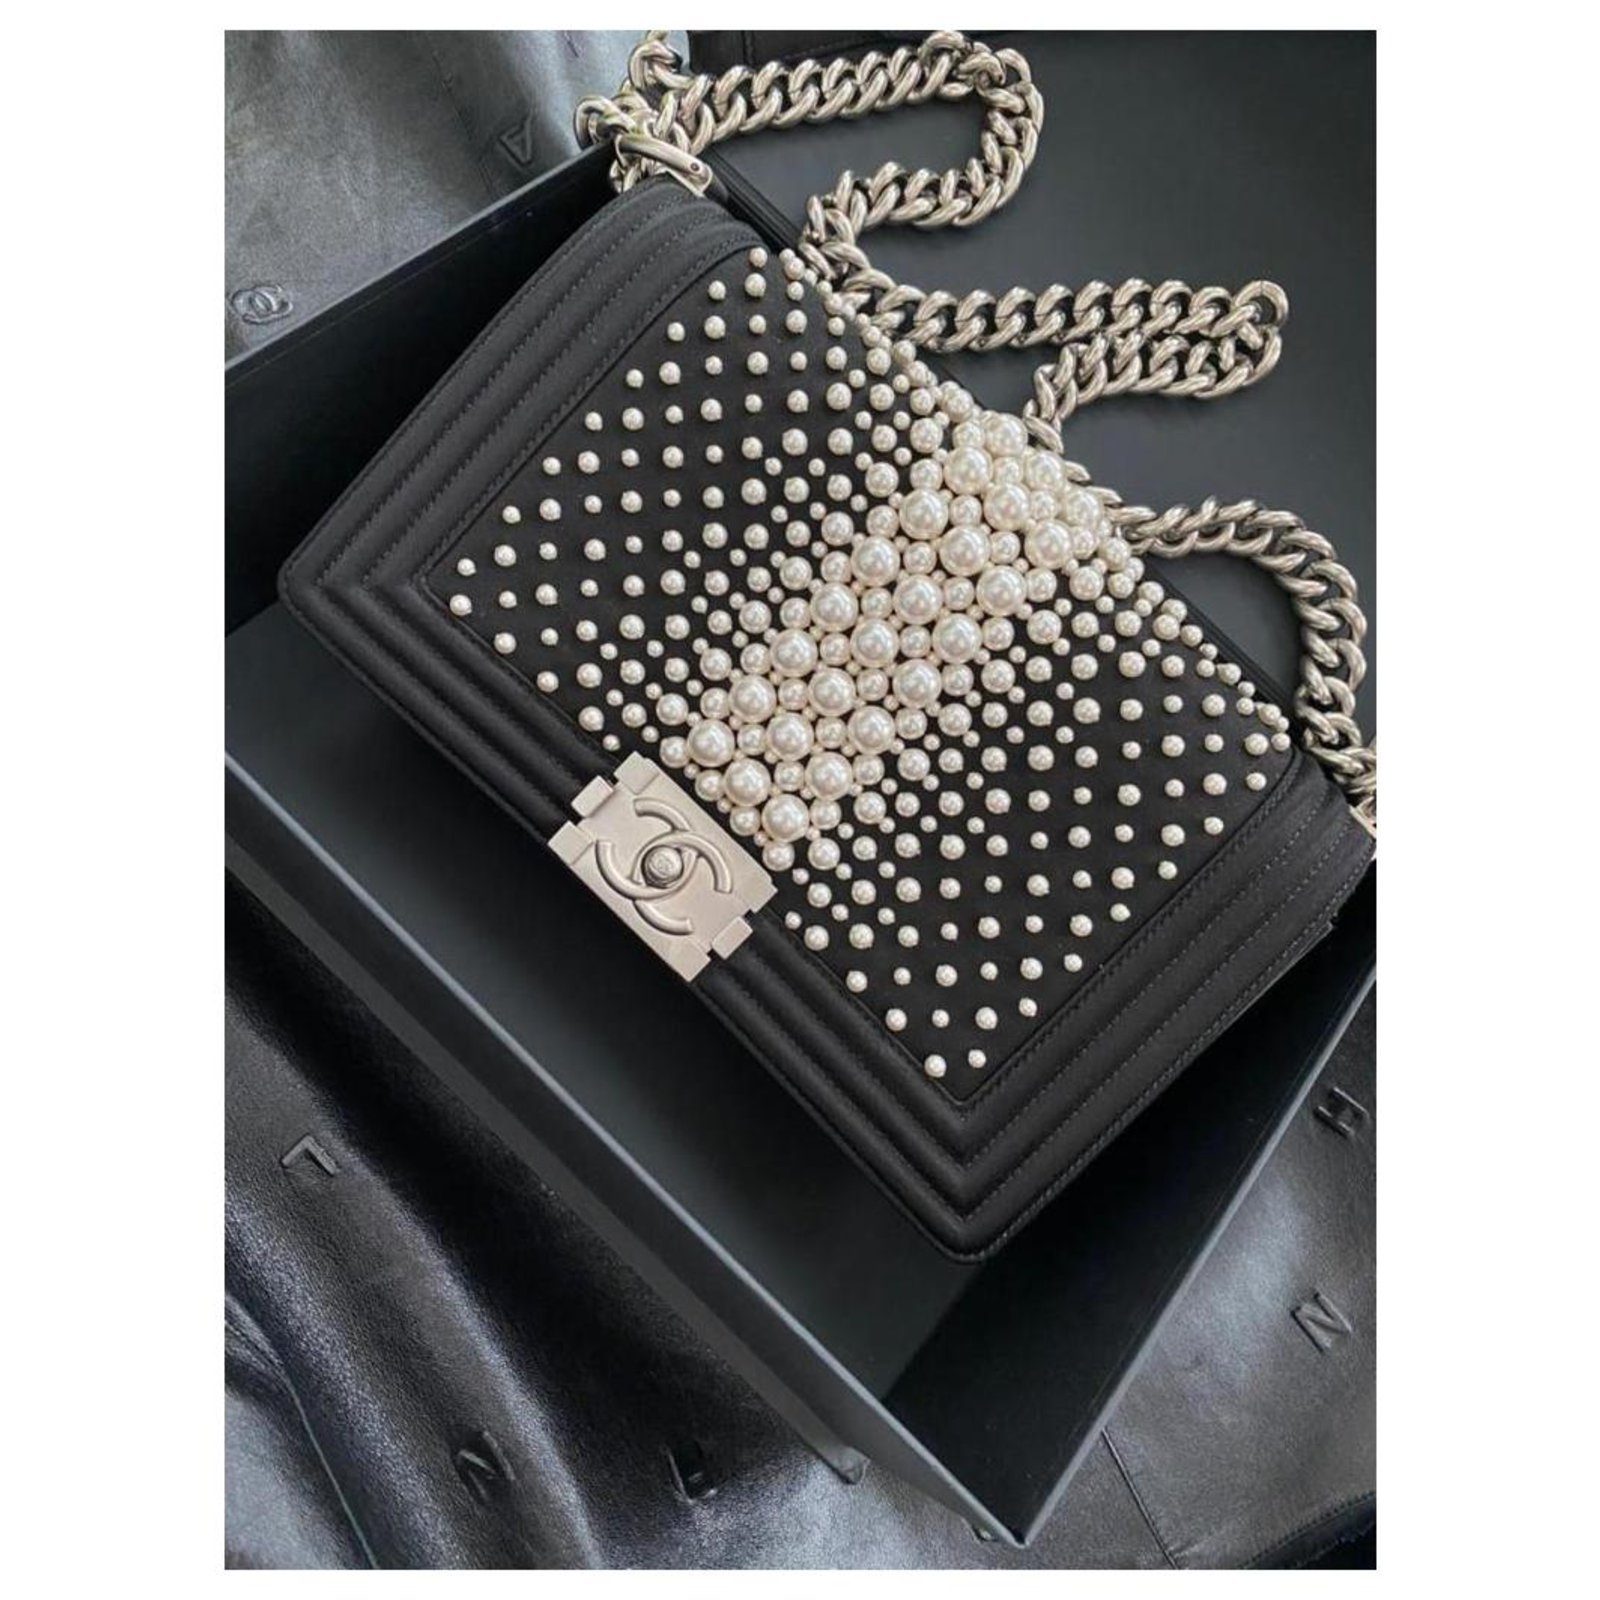 Chanel Medium Boy Bag with Pearls - Limited Edition